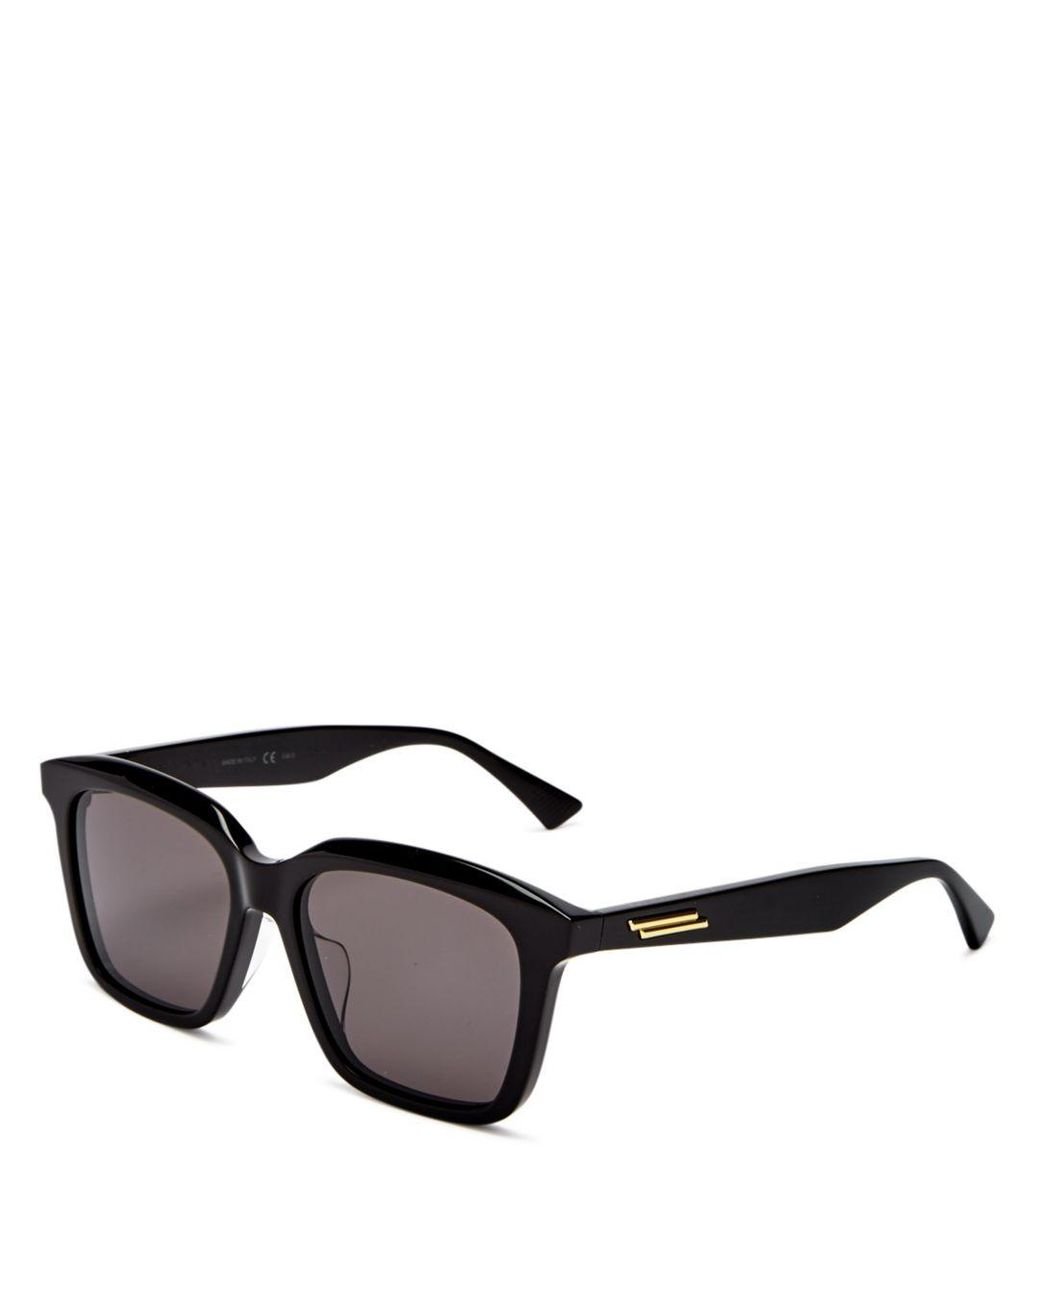 Bottega Veneta Unisex Square Sunglasses in Black / Gray (Black) - Lyst